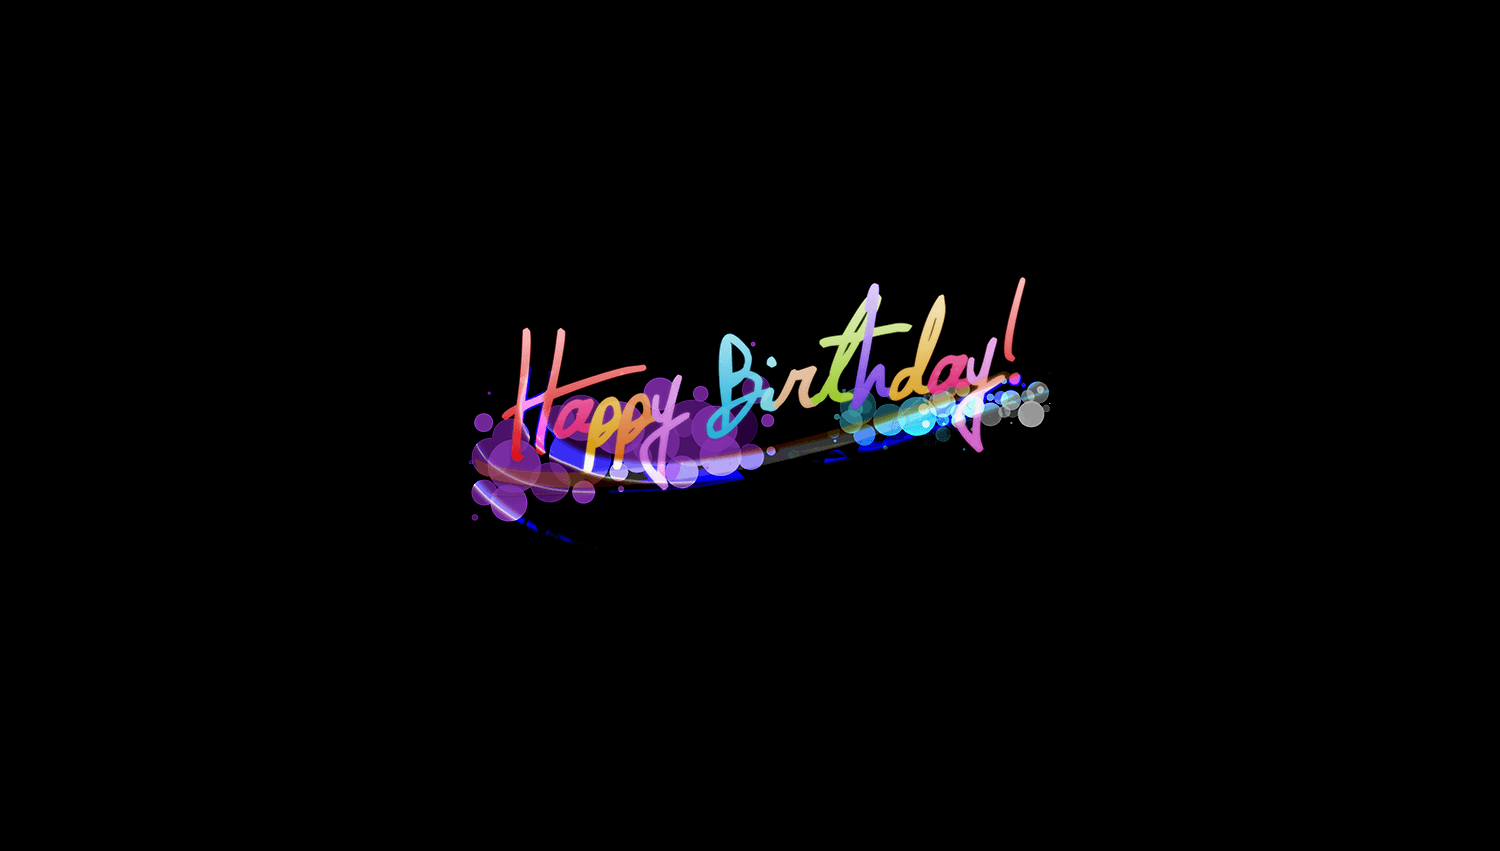 Happy Birthday Wallpaper. Download Free High Definition Desktop